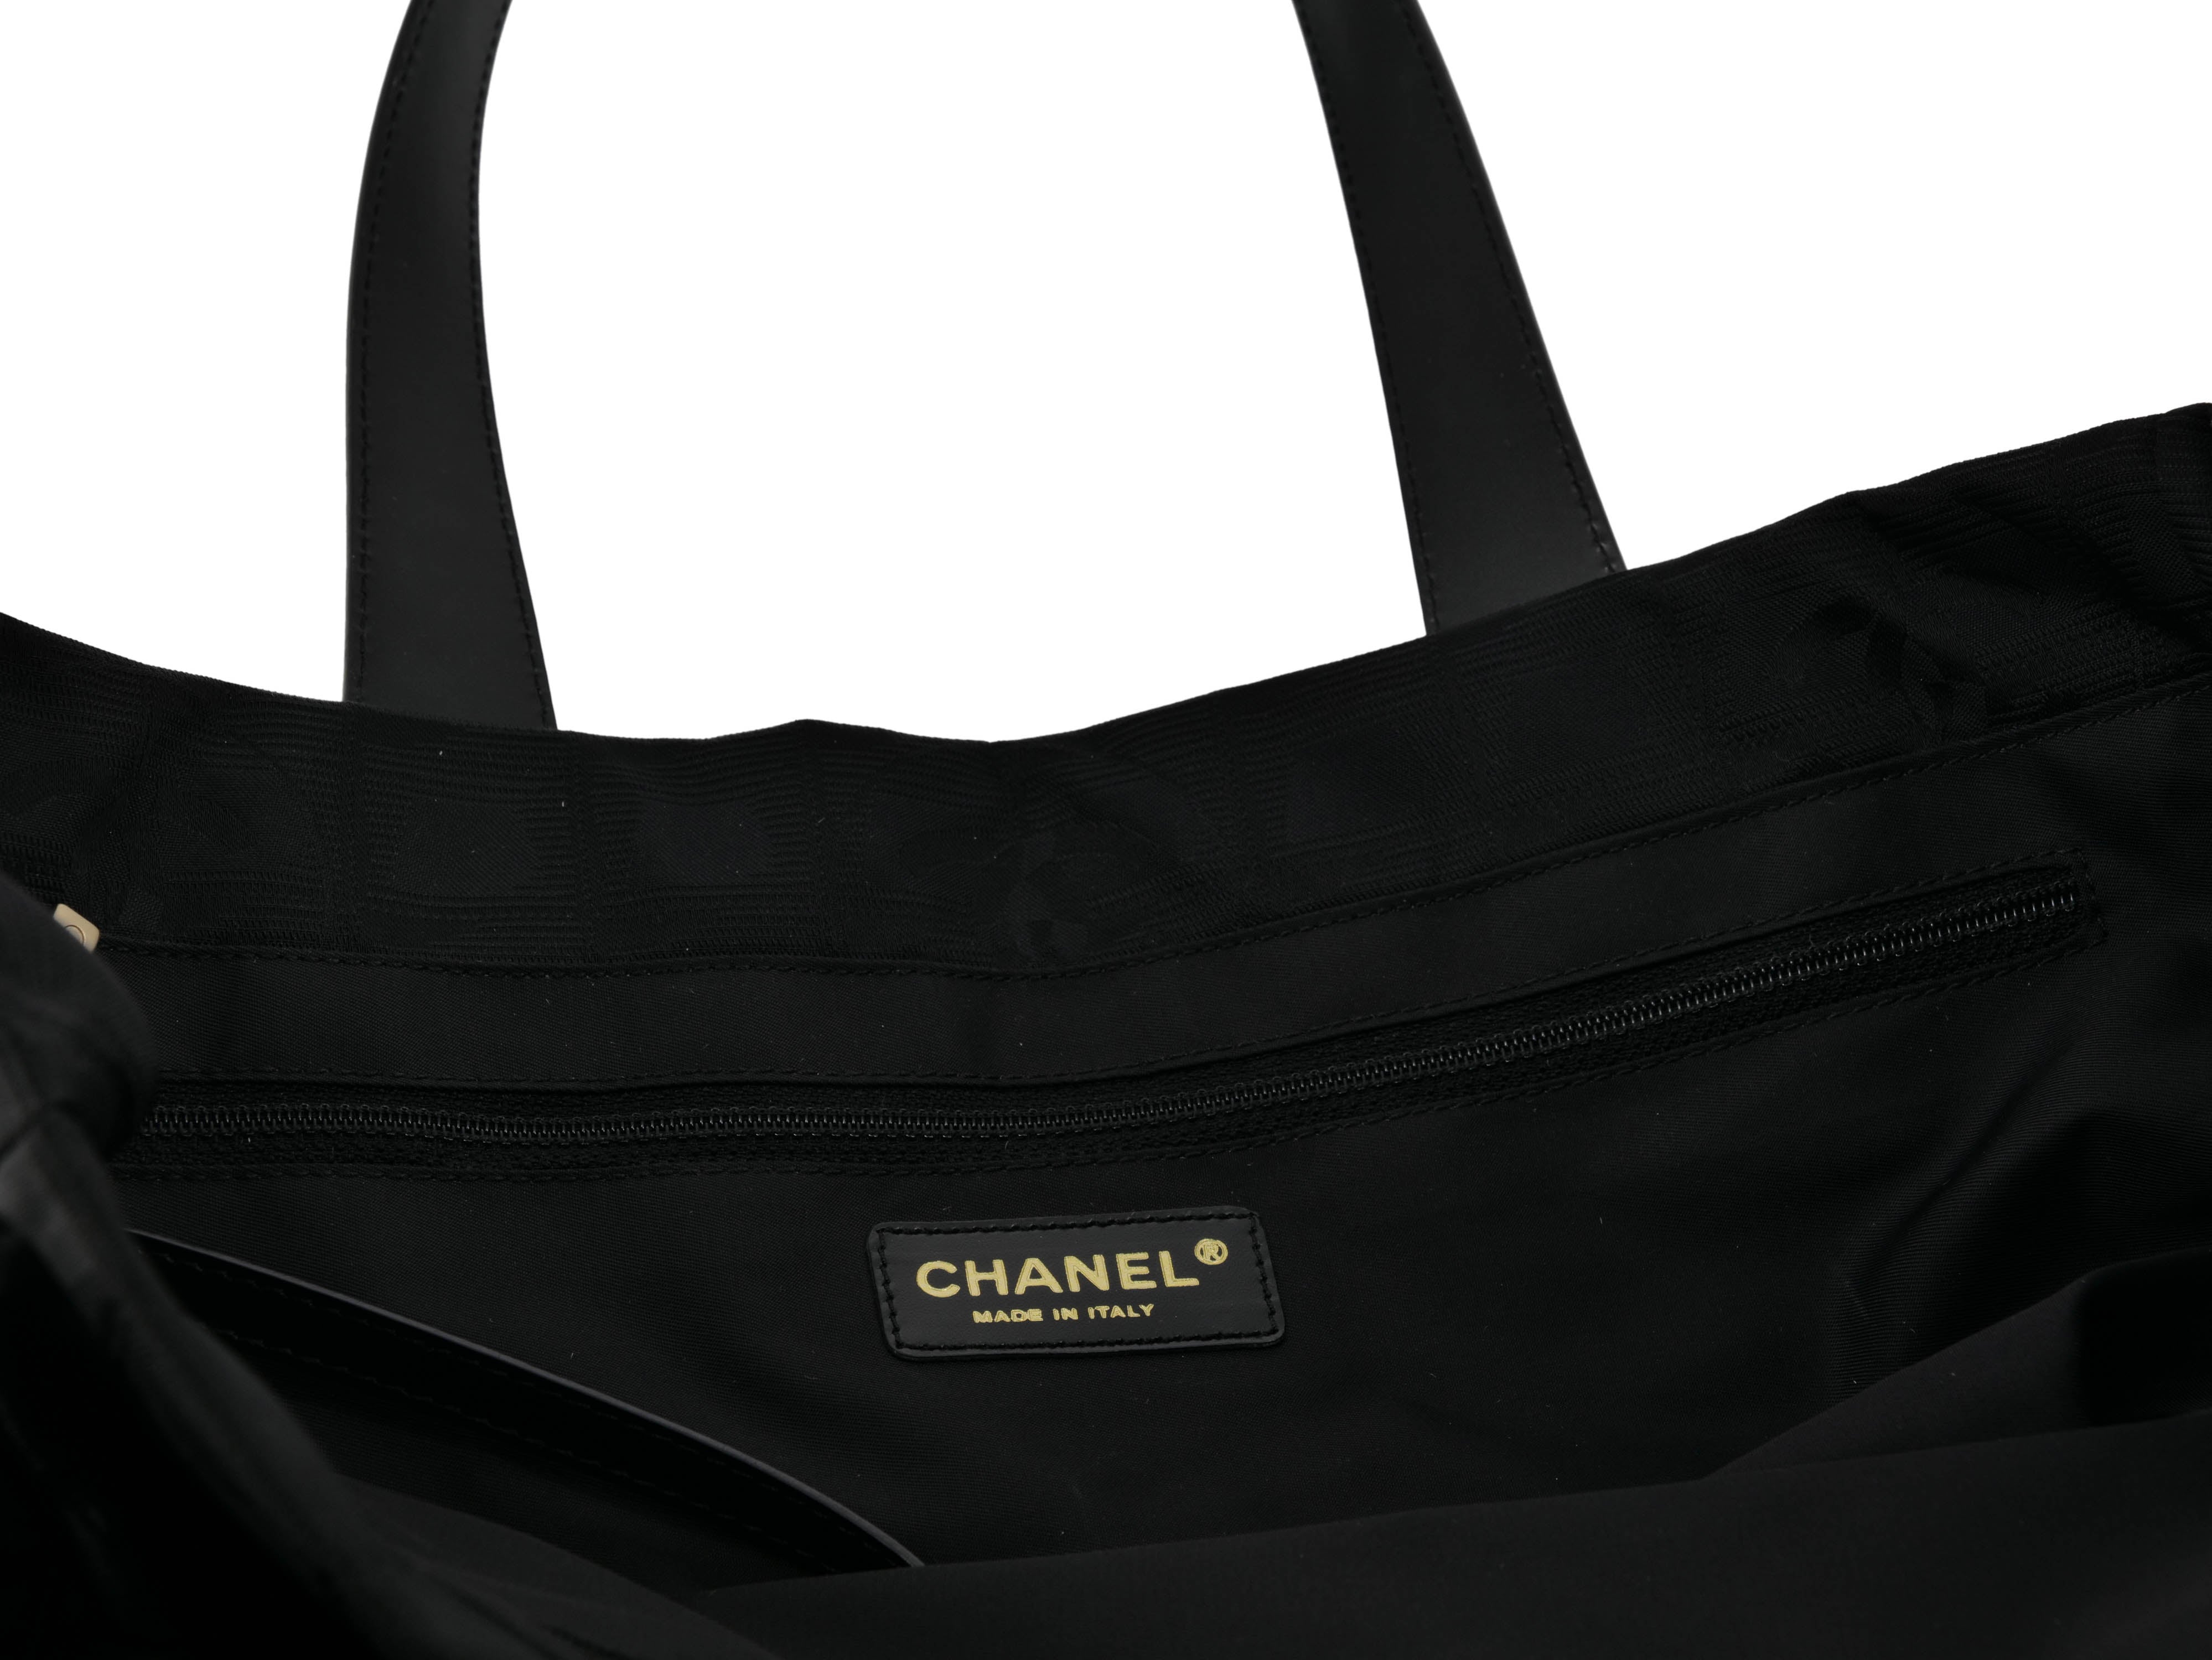 Chanel Chanel Canvas Travel Line Tote Bag ASL3267